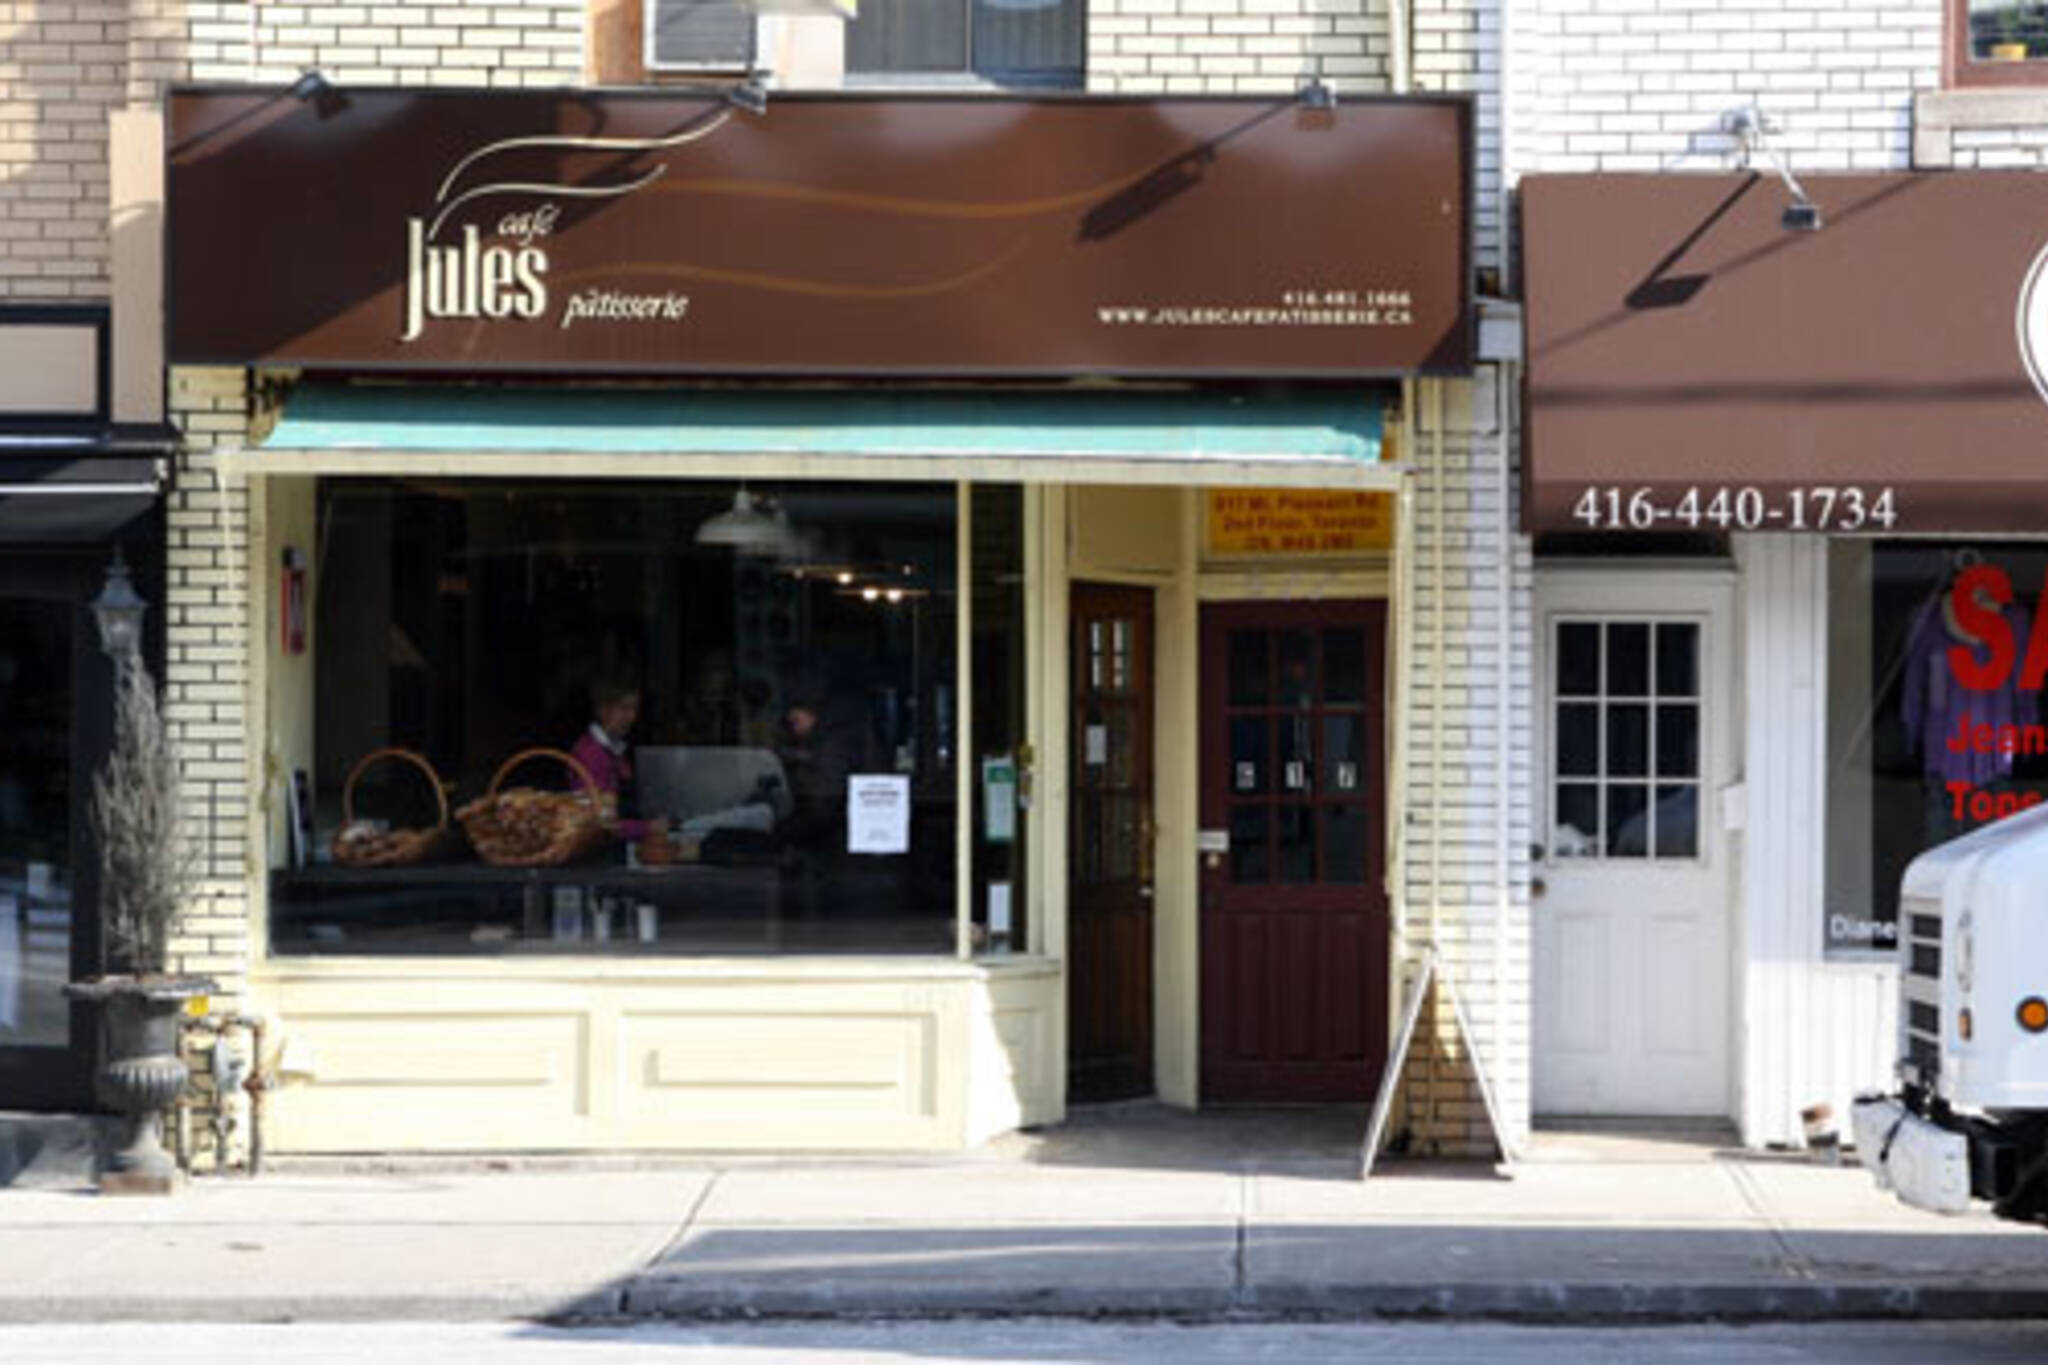 Jules Cafe Patisserie